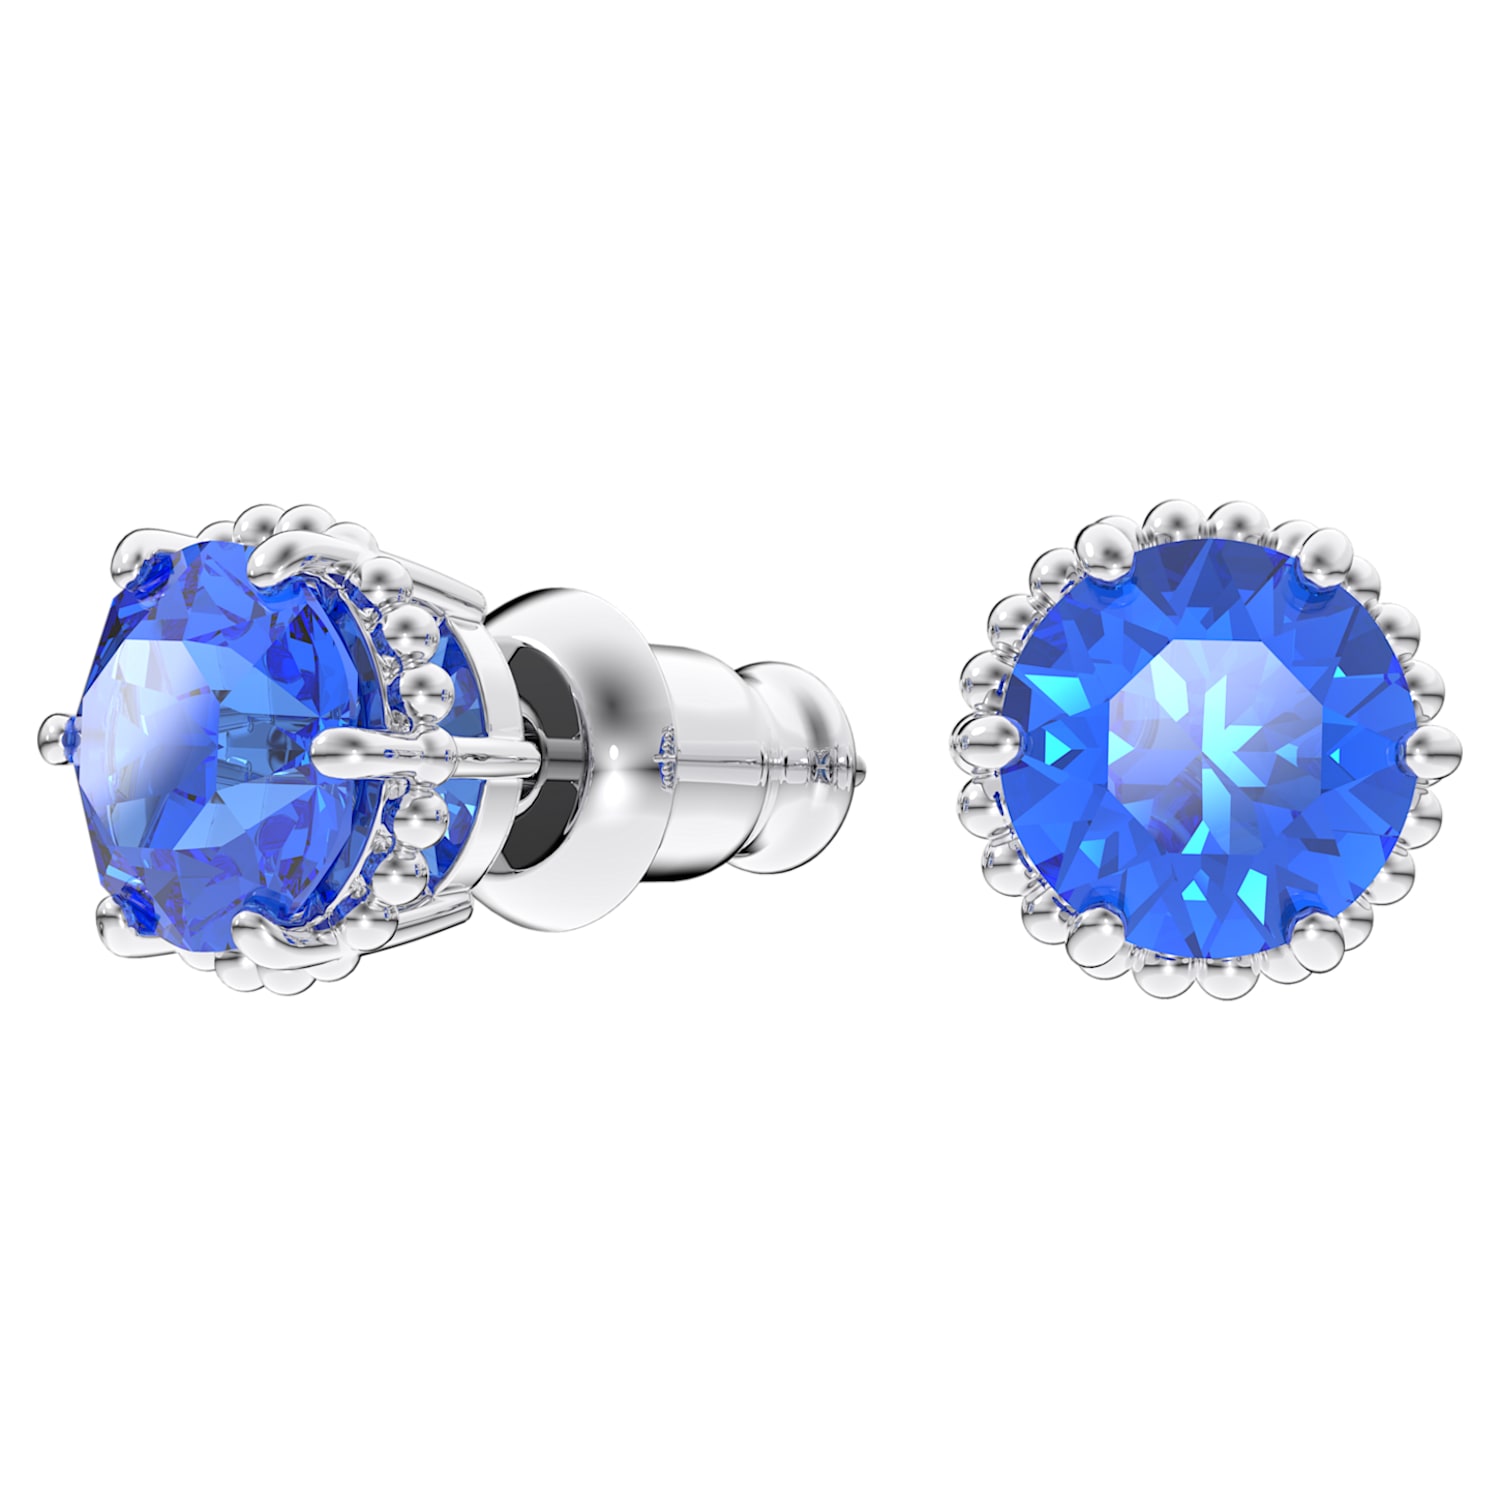 Stainless Steel Crystal Birthstone Round Mens Womens Ear Stud Earring Jewelry 